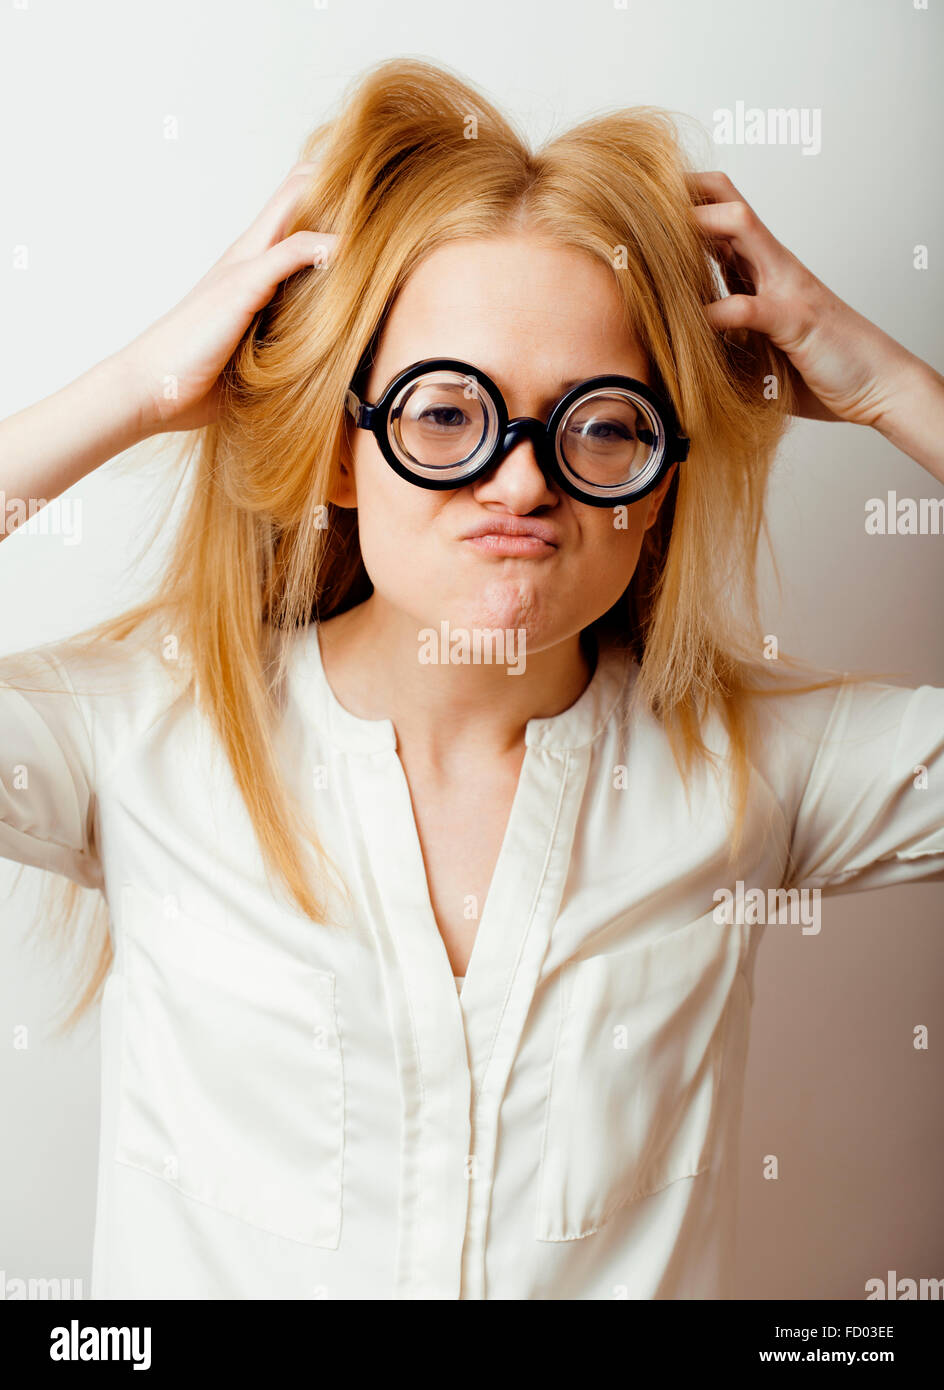 young-blond-teenage-girl-in-big-glasses-fool-around-having-fun-student-FD03EE.jpg